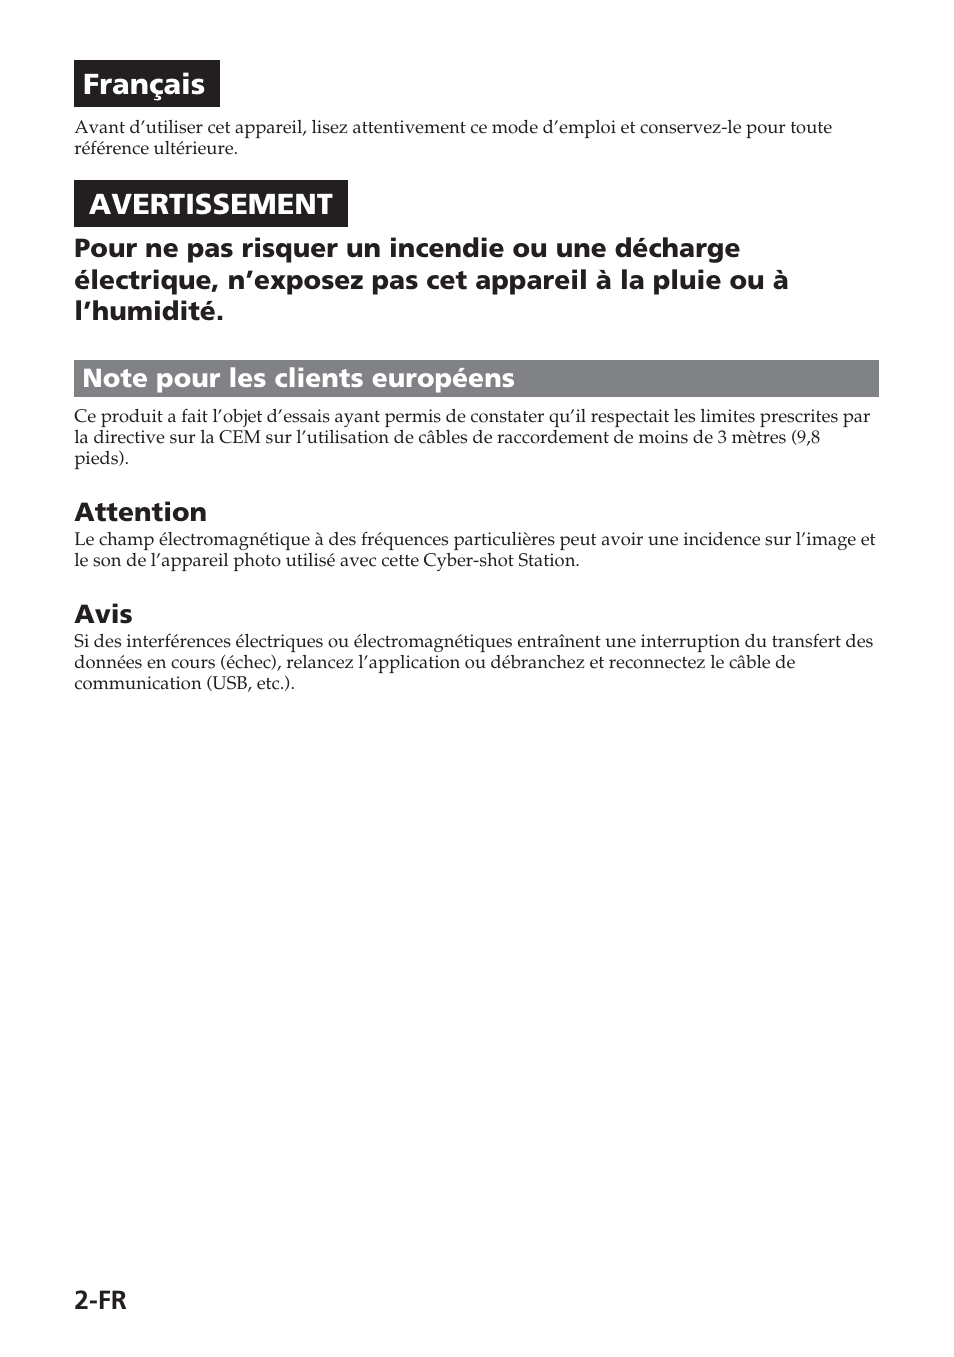 Français, Avertissement | Sony Cyber-Shot Station CSS-PHB Manuel d'utilisation | Page 16 / 32